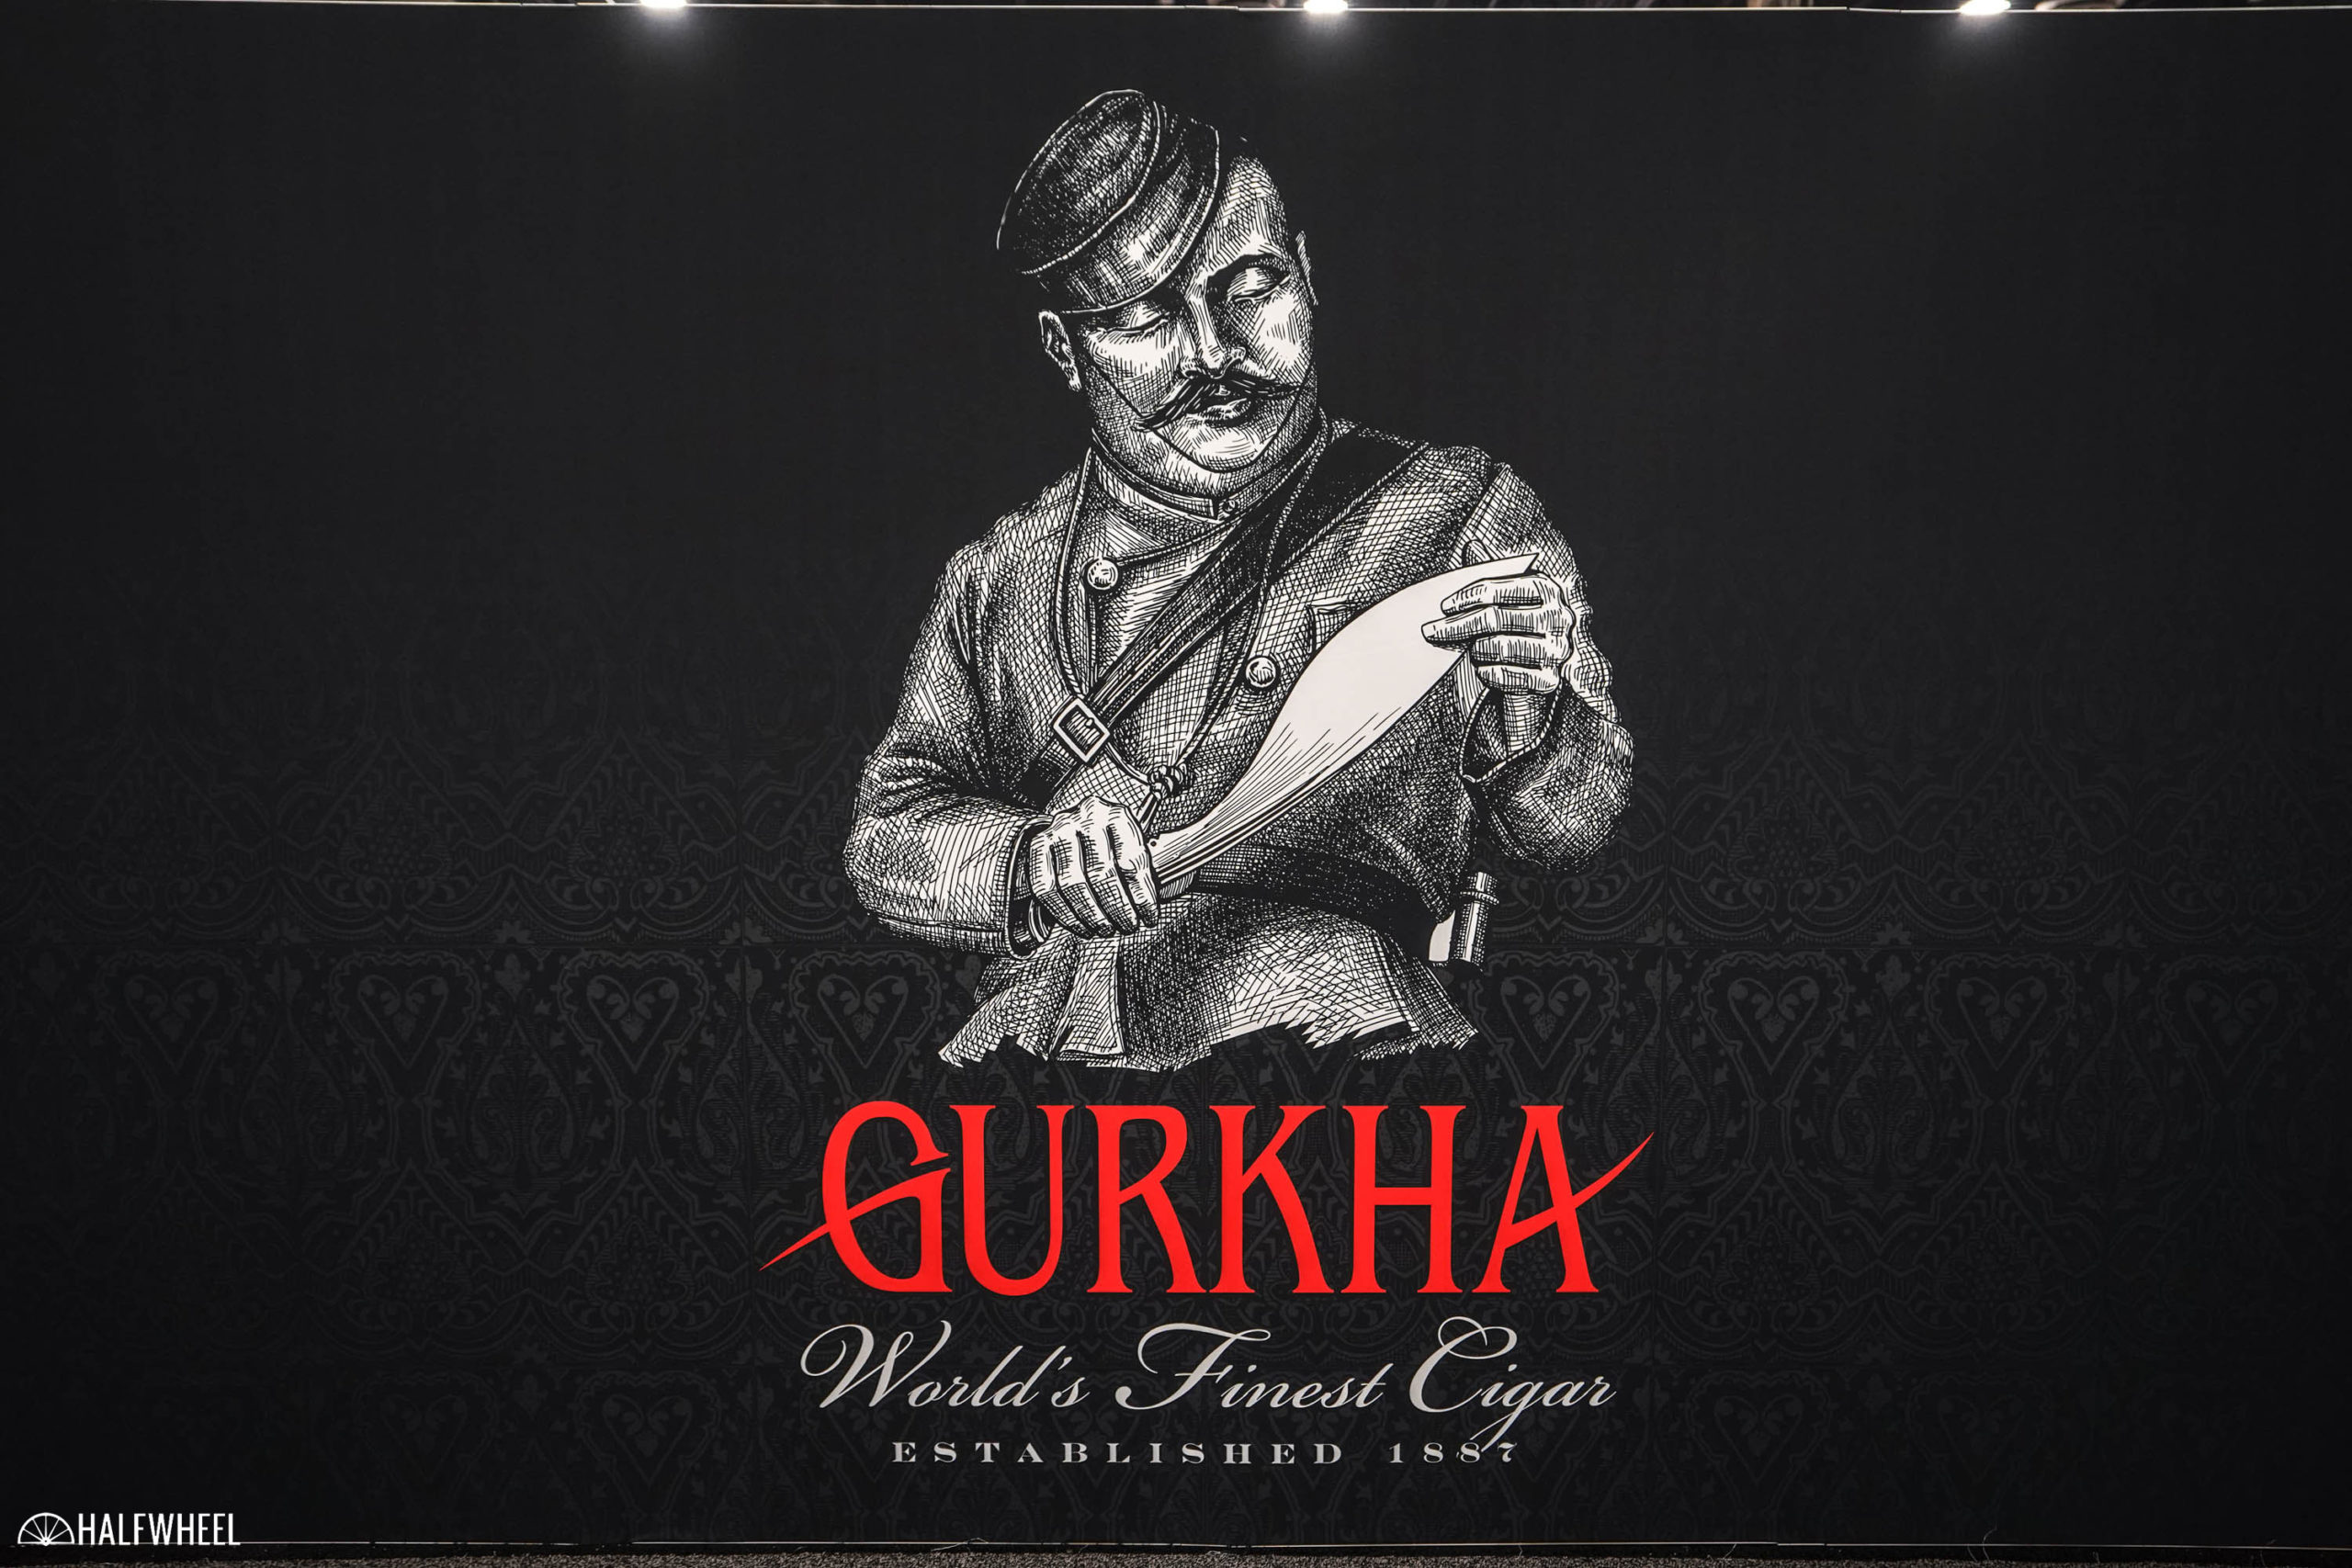 Gurkha-logo-feature-scaled.jpg